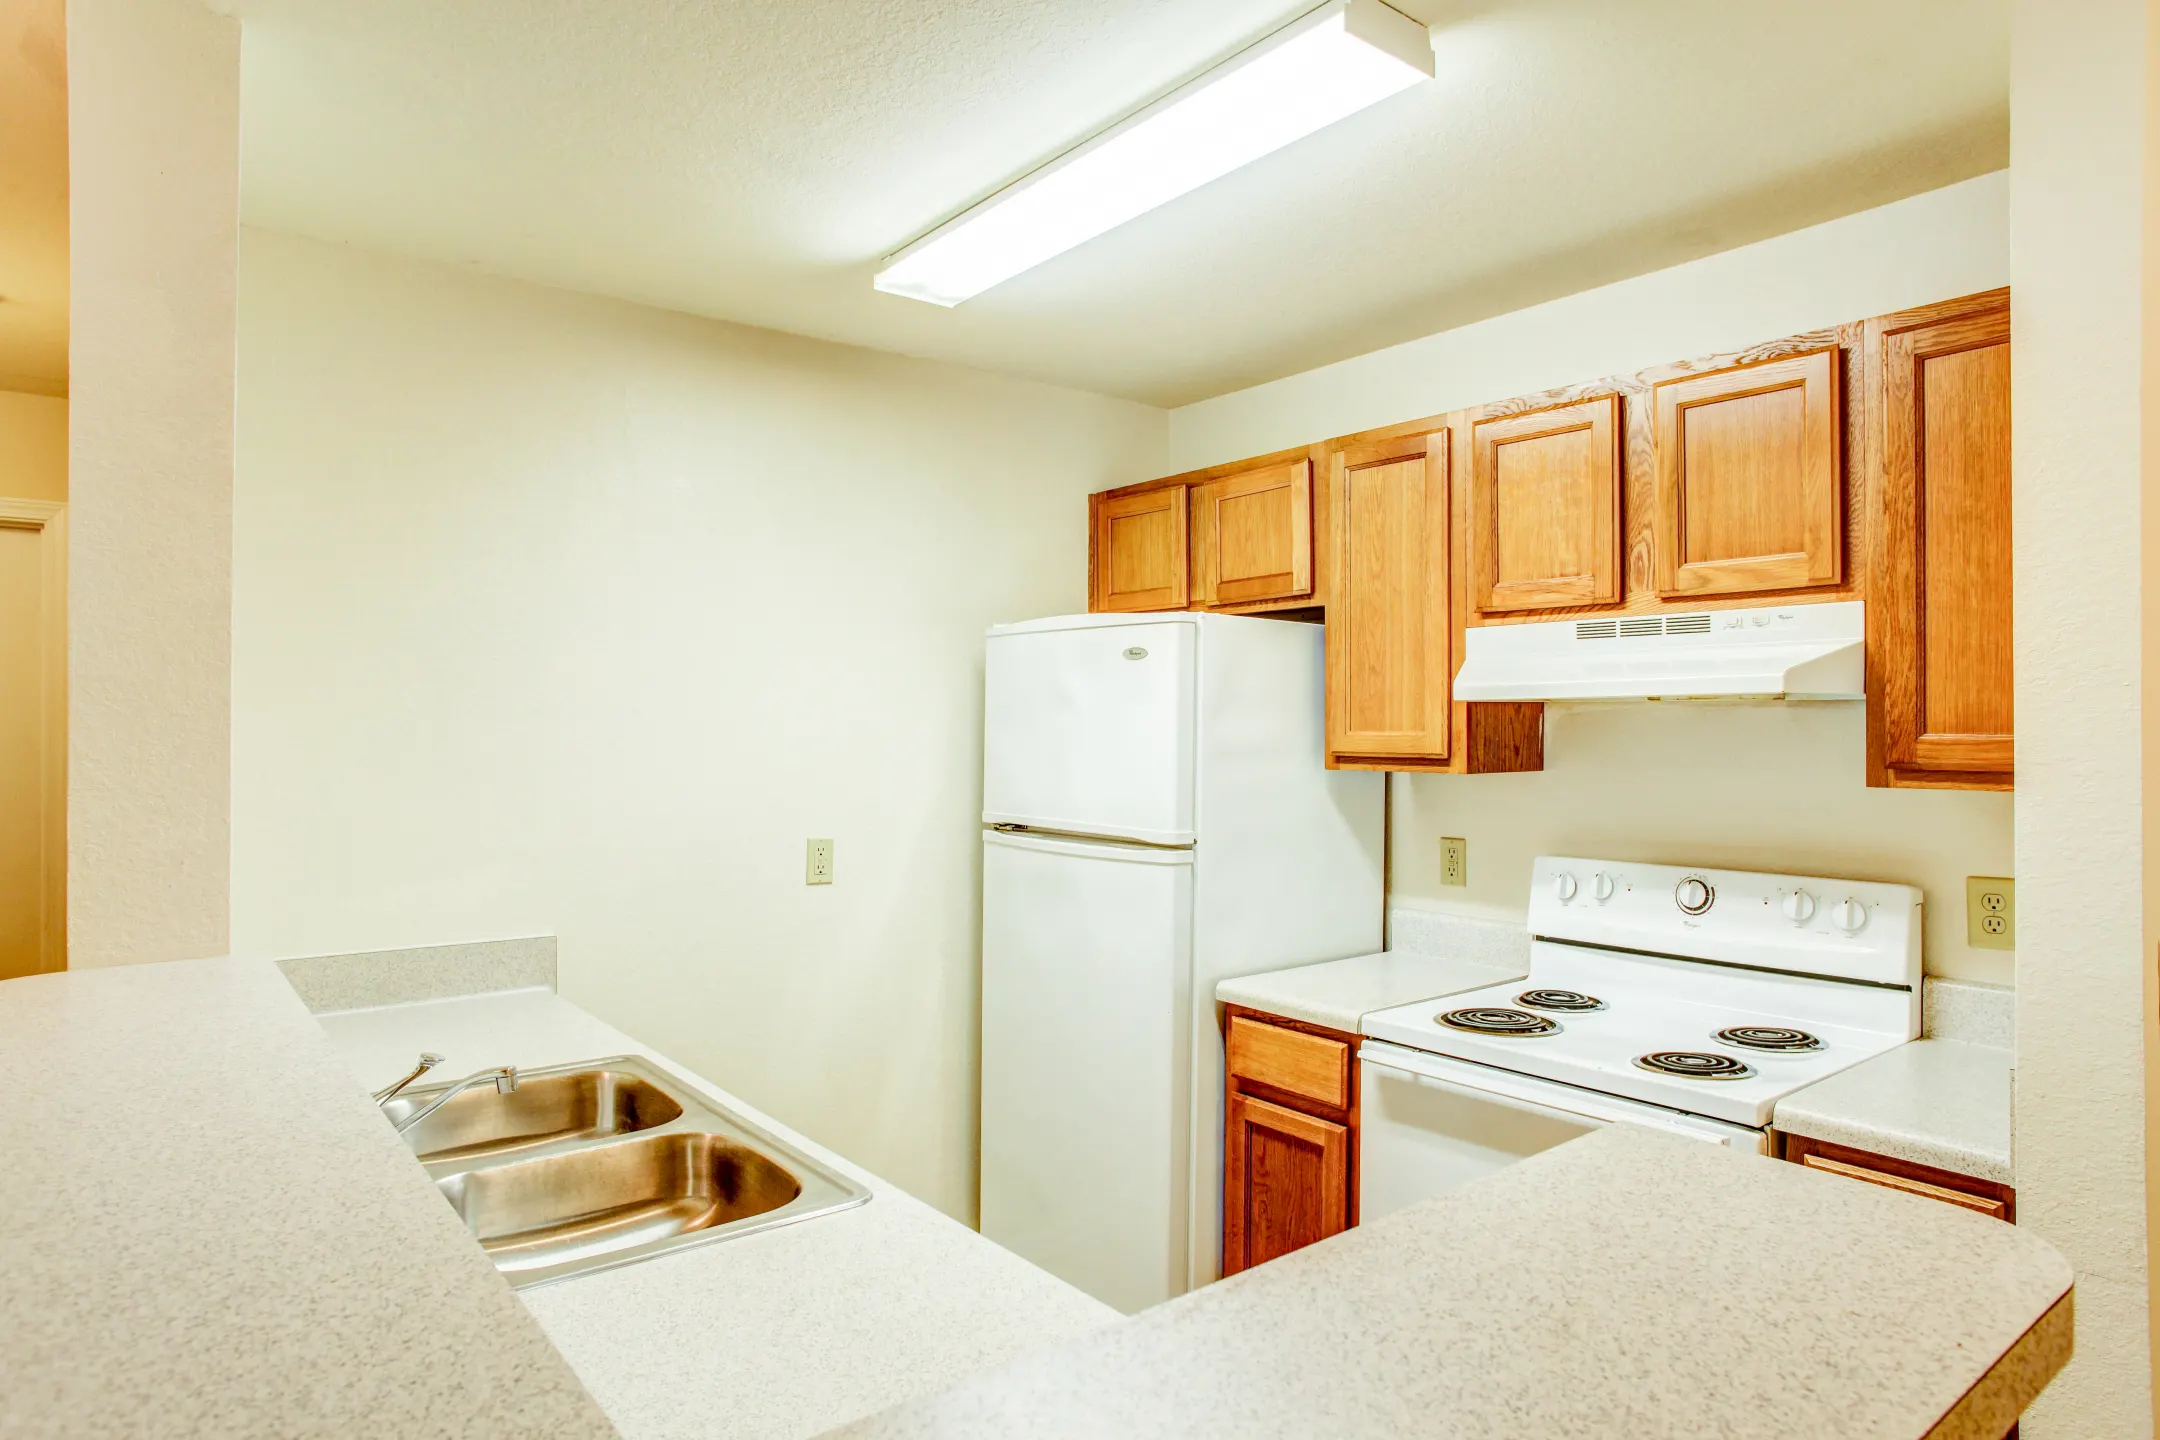 Kitchen - Walker Rosa Apartments - Kingsport, TN